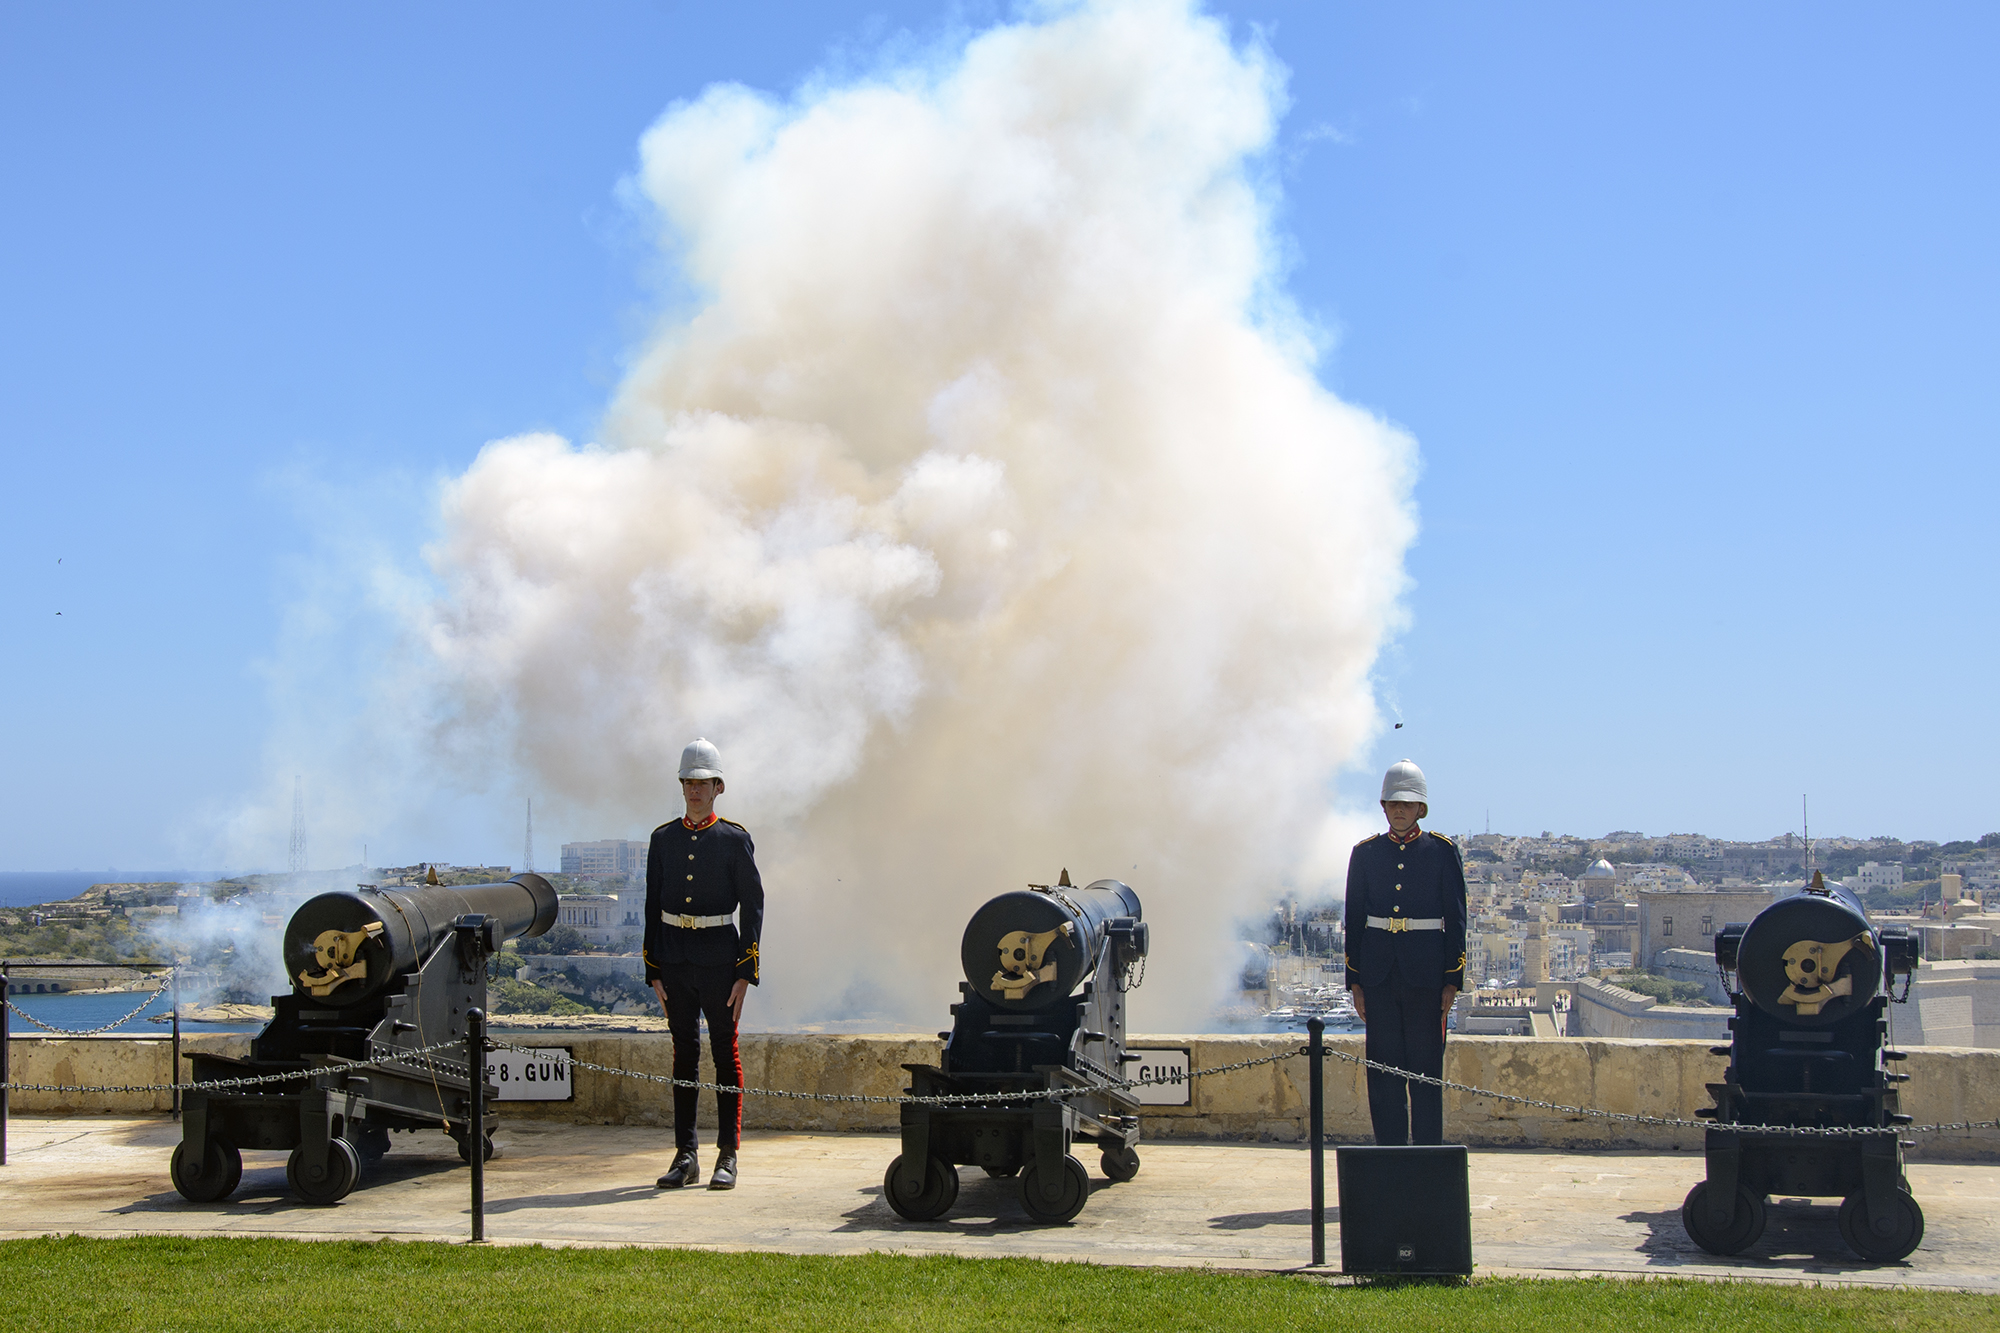 Saluting Battery Upper Barrakka Gardens Valletta